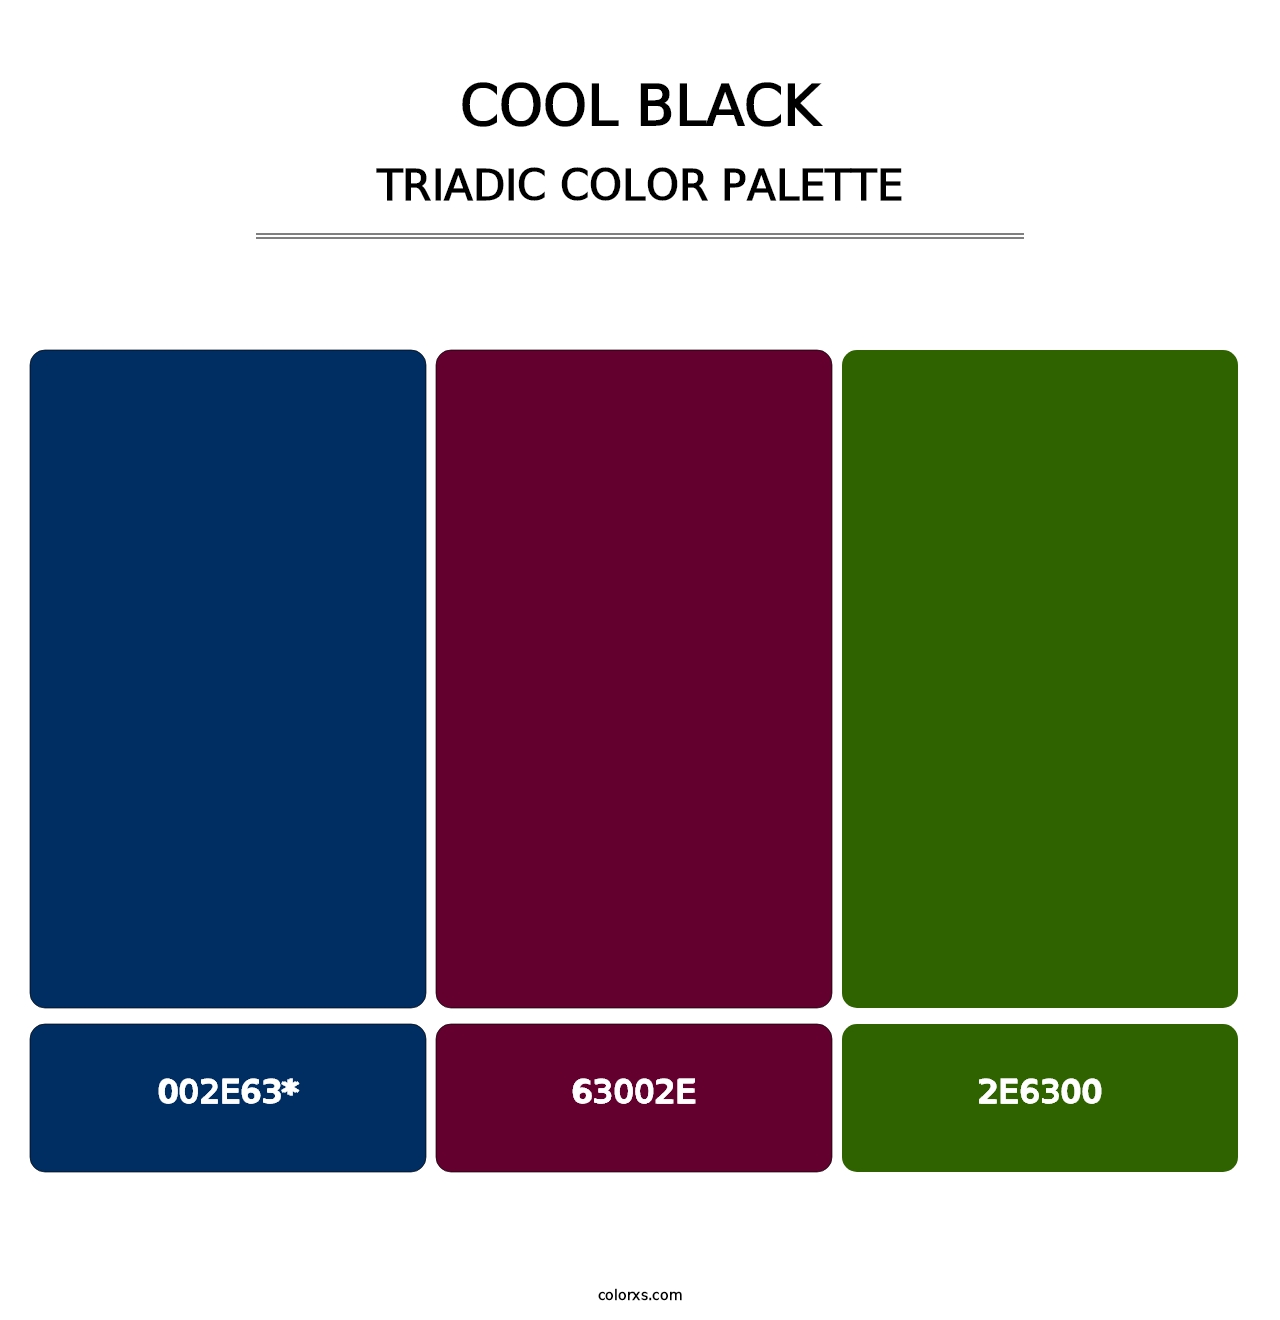 Cool Black - Triadic Color Palette